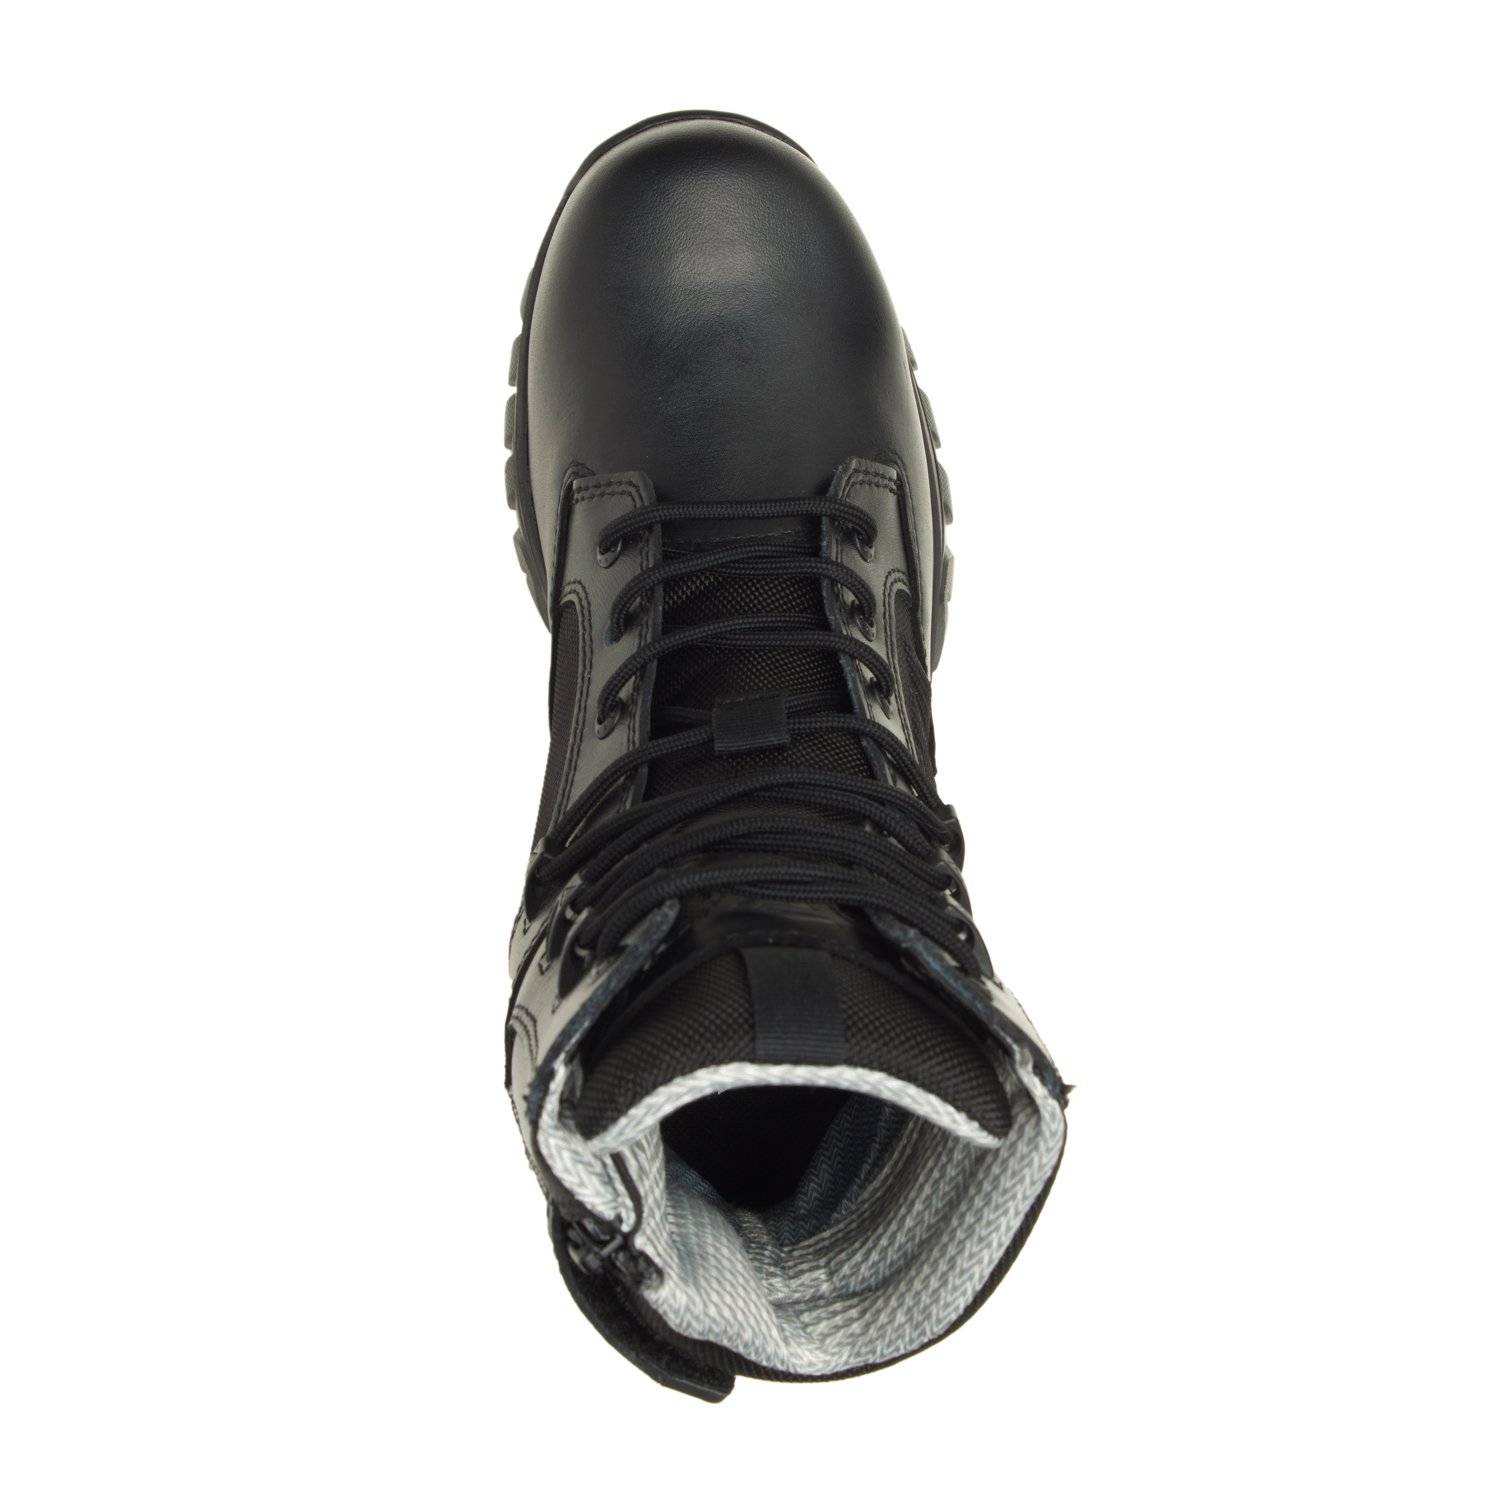 Bates GX X2 Women's Tall Side-Zip DRYGUARD+ Waterproof Boots